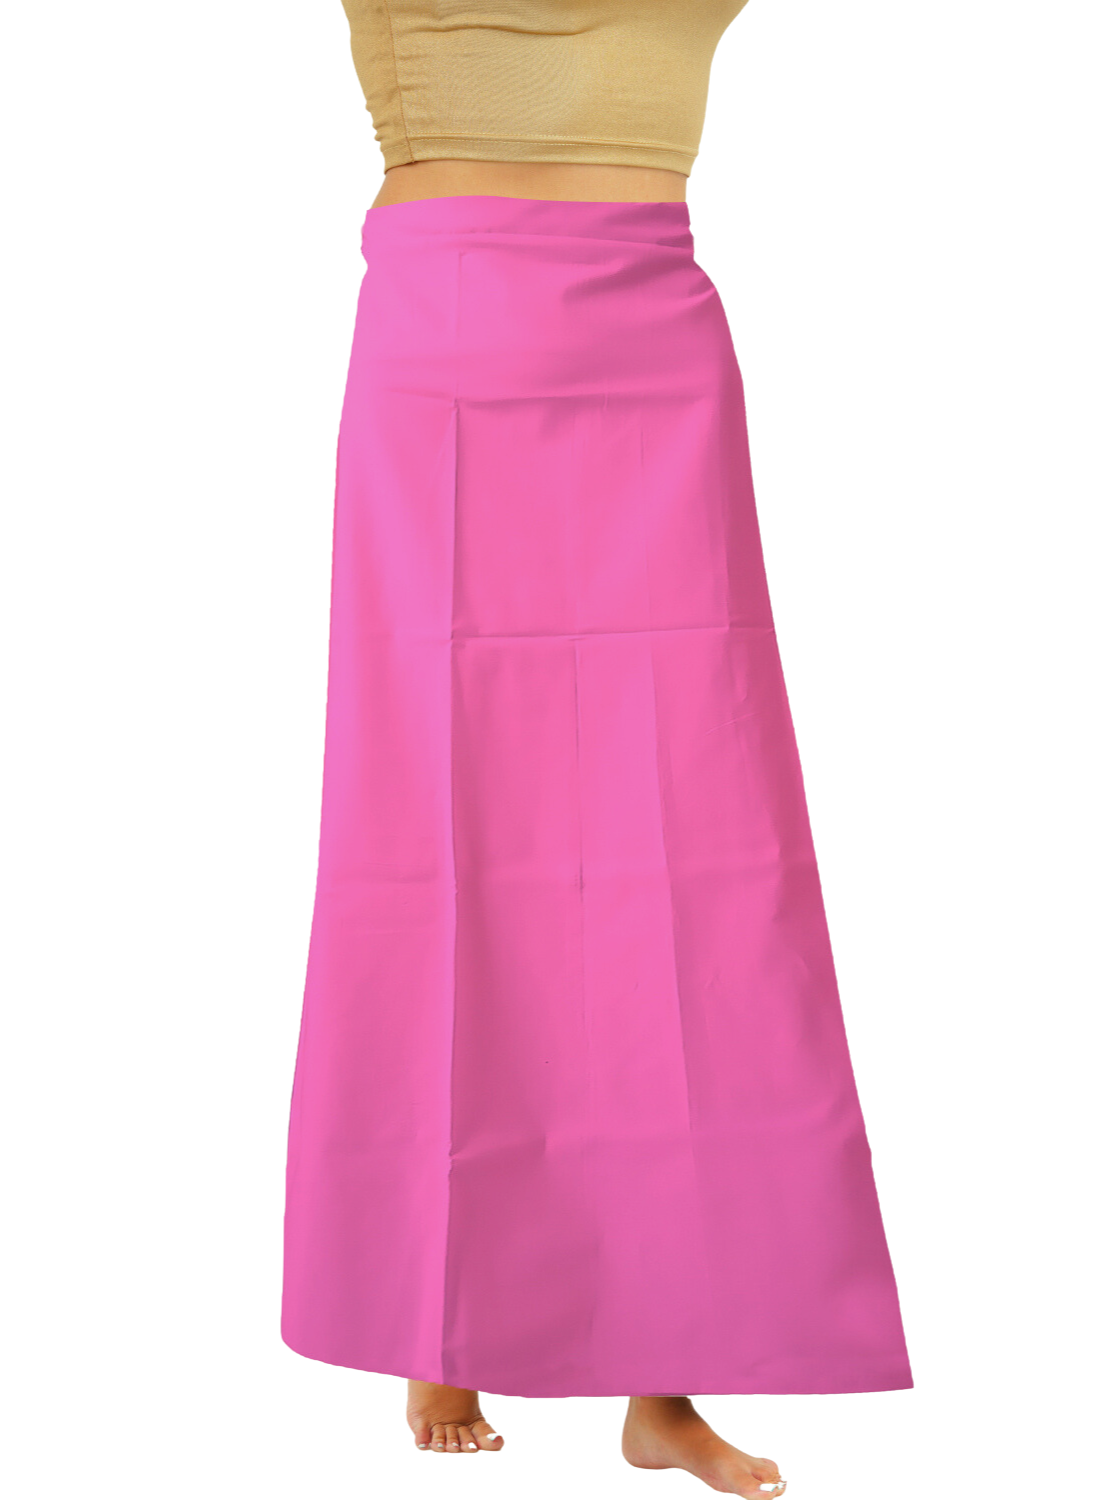 New Arrivals MANGAI Superior Cotton Petticoats - 8 Part Premium Embroidery Petticoats